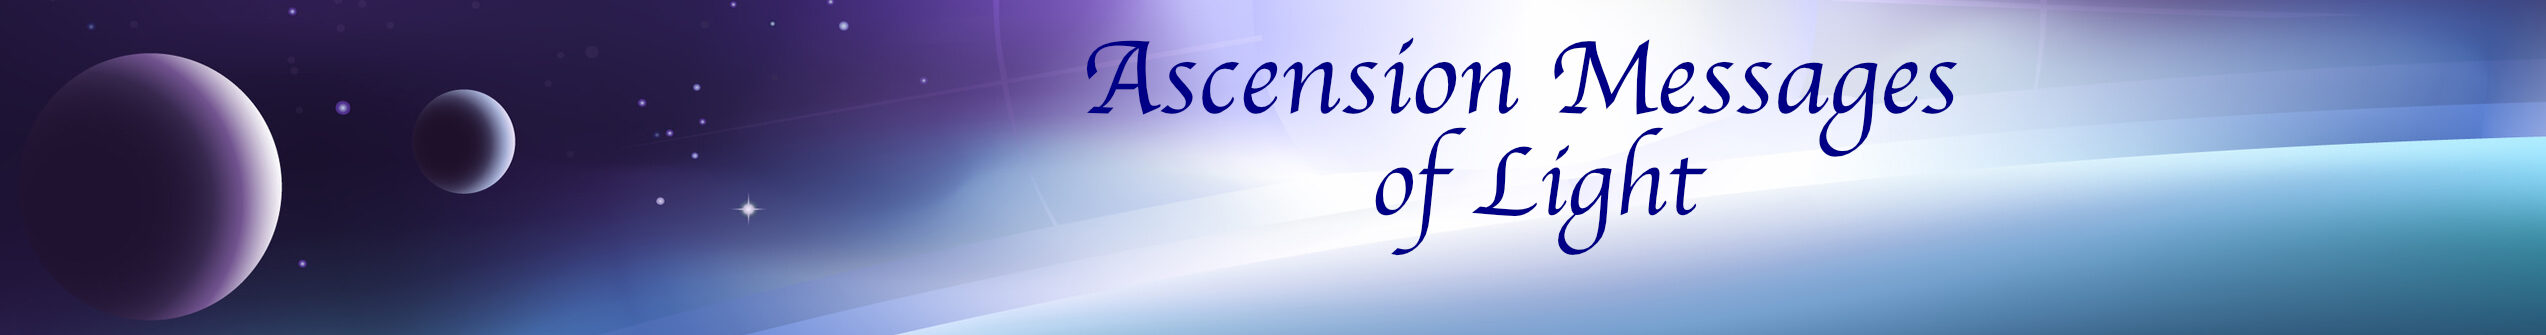 Ascension Messages of Light